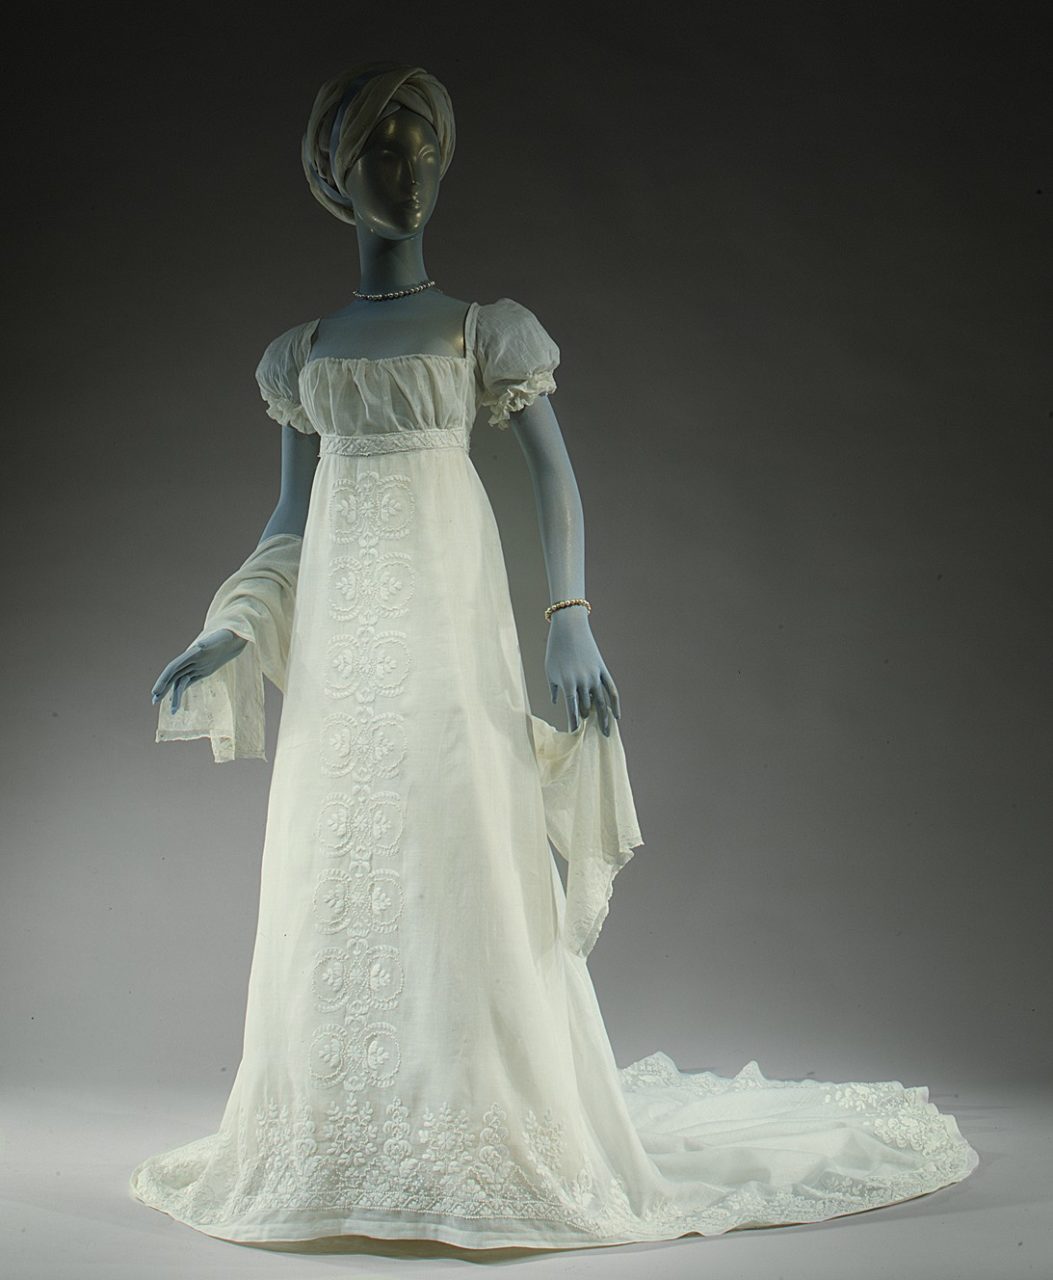 18th century muslin gown